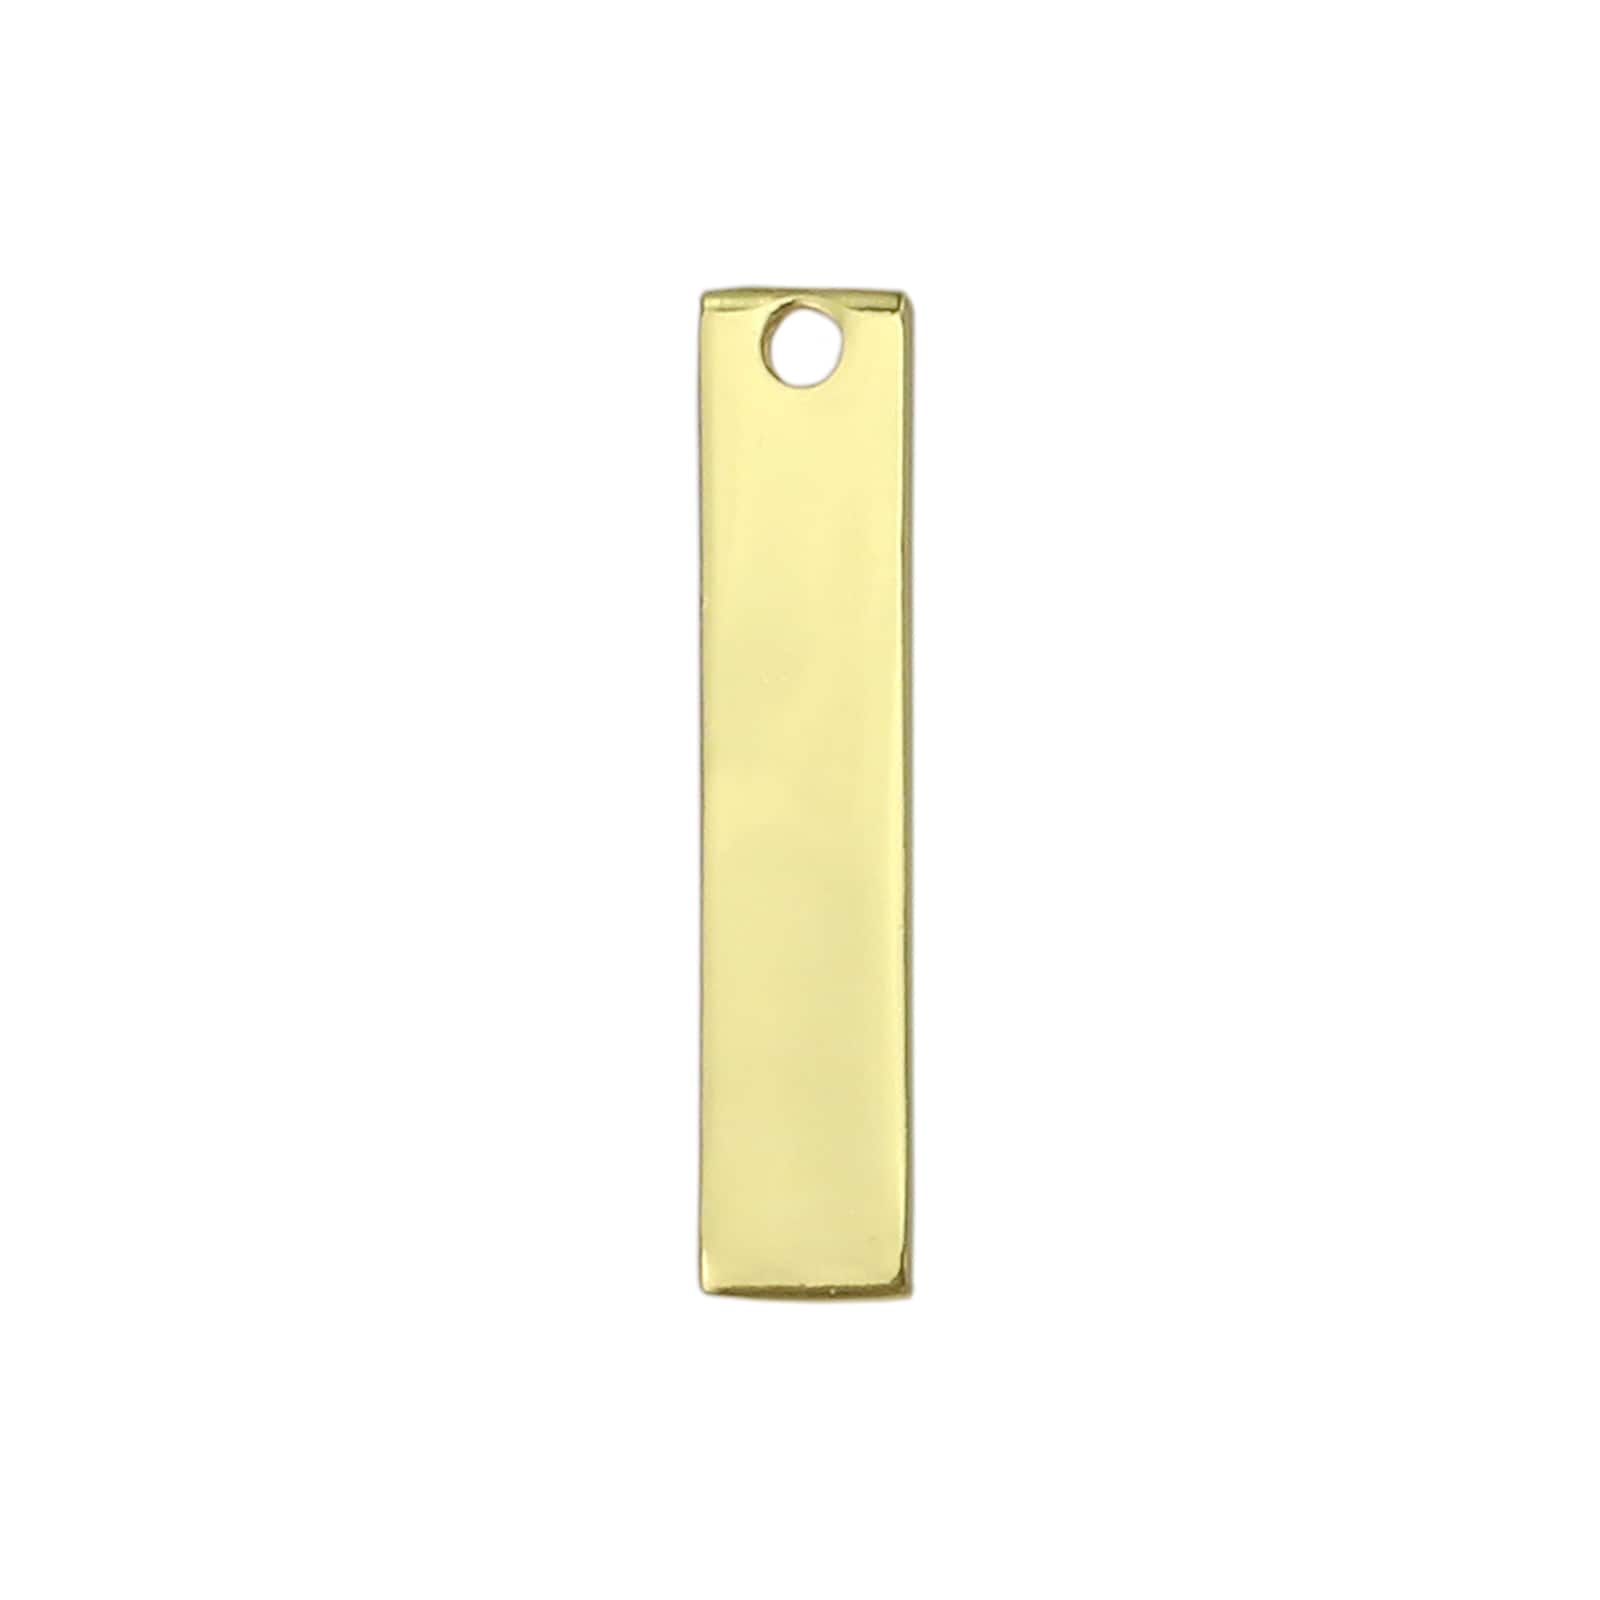 Buy the ImpressArt Brass Strip Premium Stamping Blanks, 0.25 x 1.5 at  Michaels